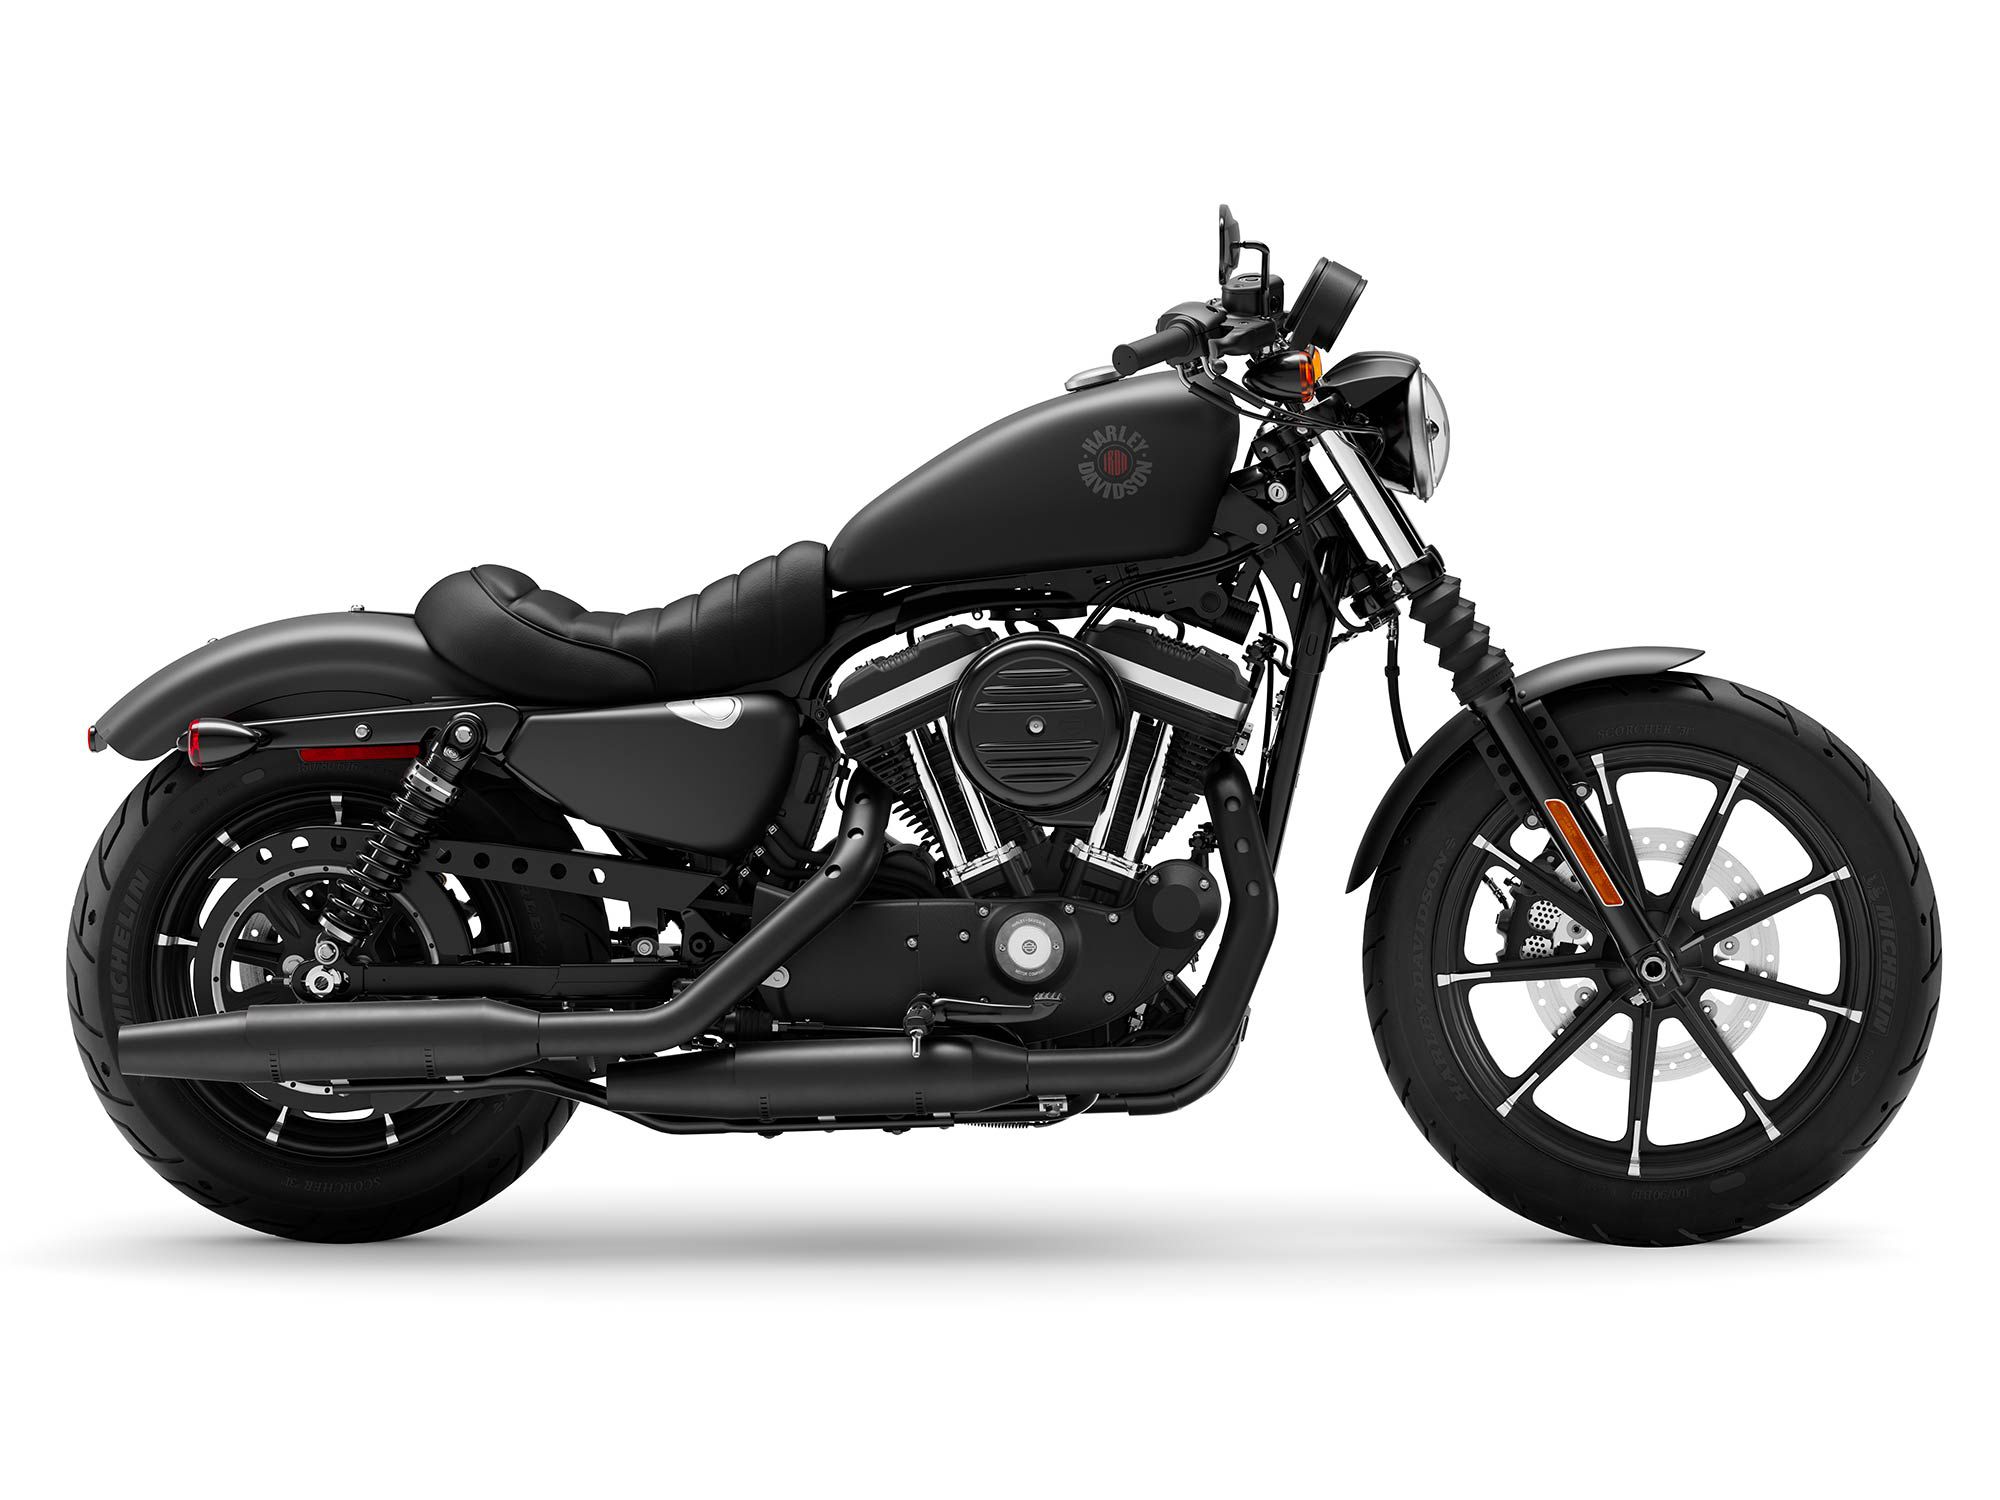 2022 Harley-Davidson Iron 883 in Black Denim.